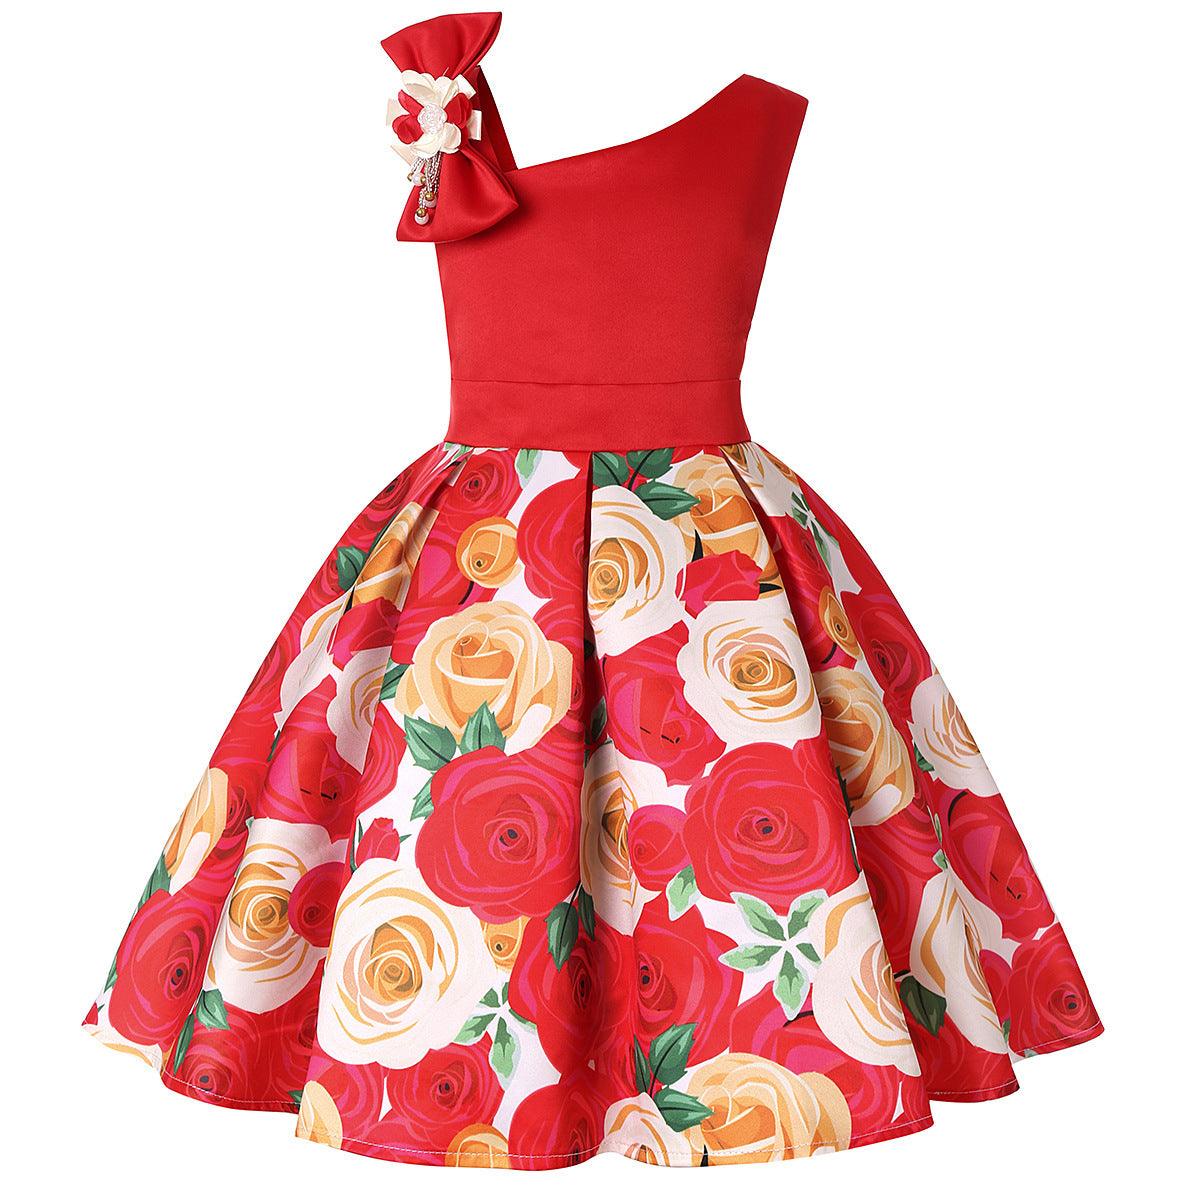 Girls' Digital Floral Print Princess Dresses: Children's Elegant Attire - K3N VENTURES